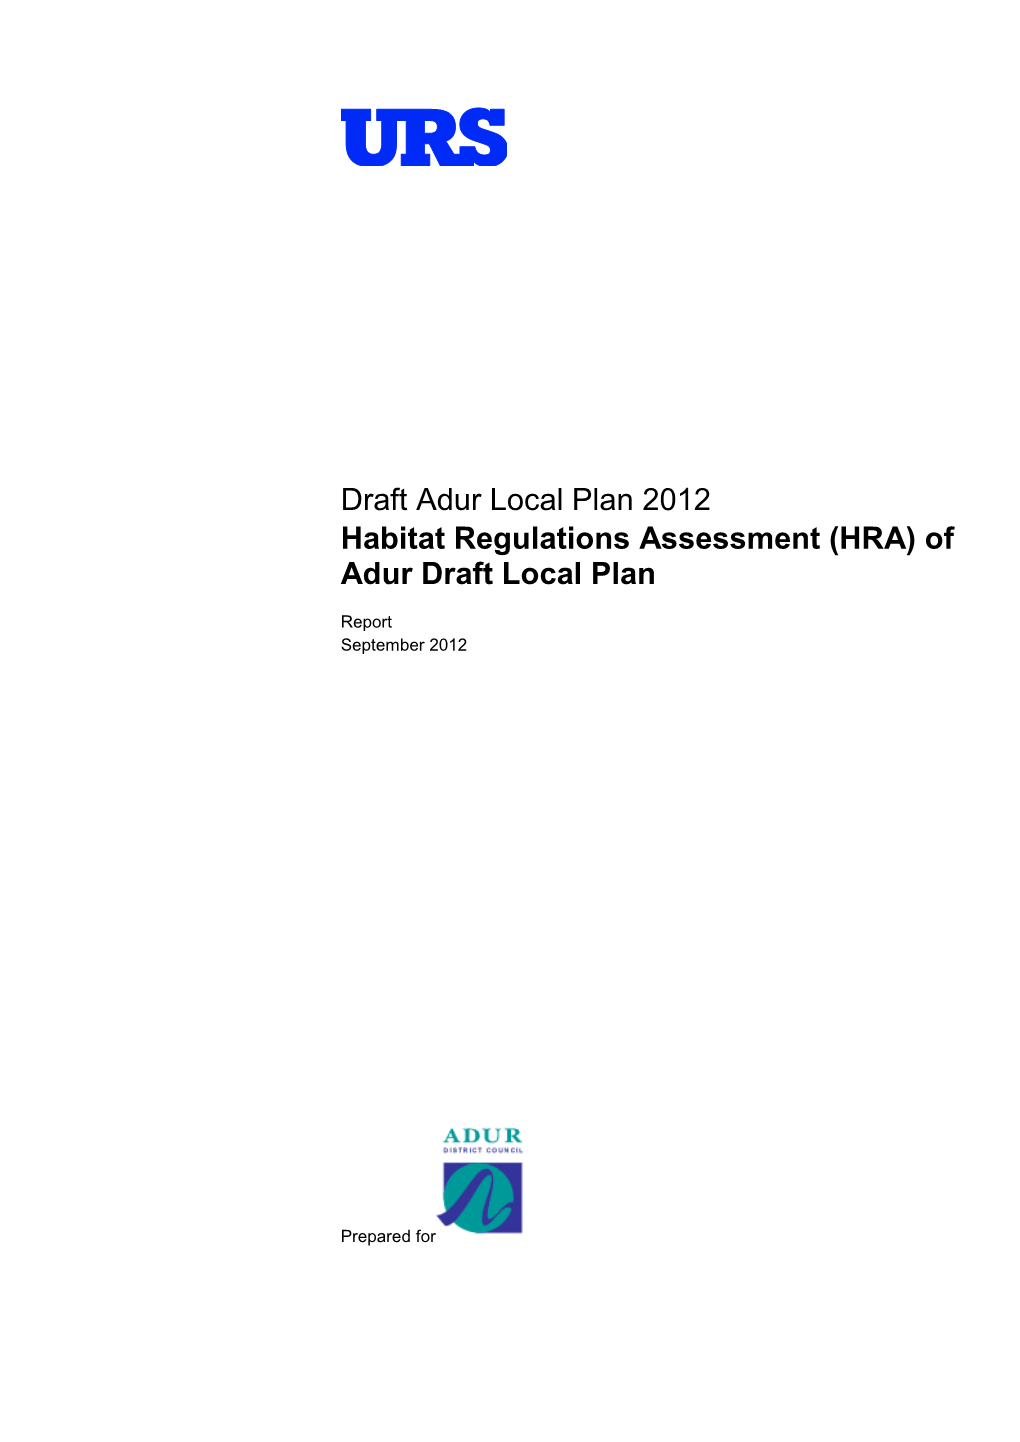 Adur Habitat Regulations Assessment